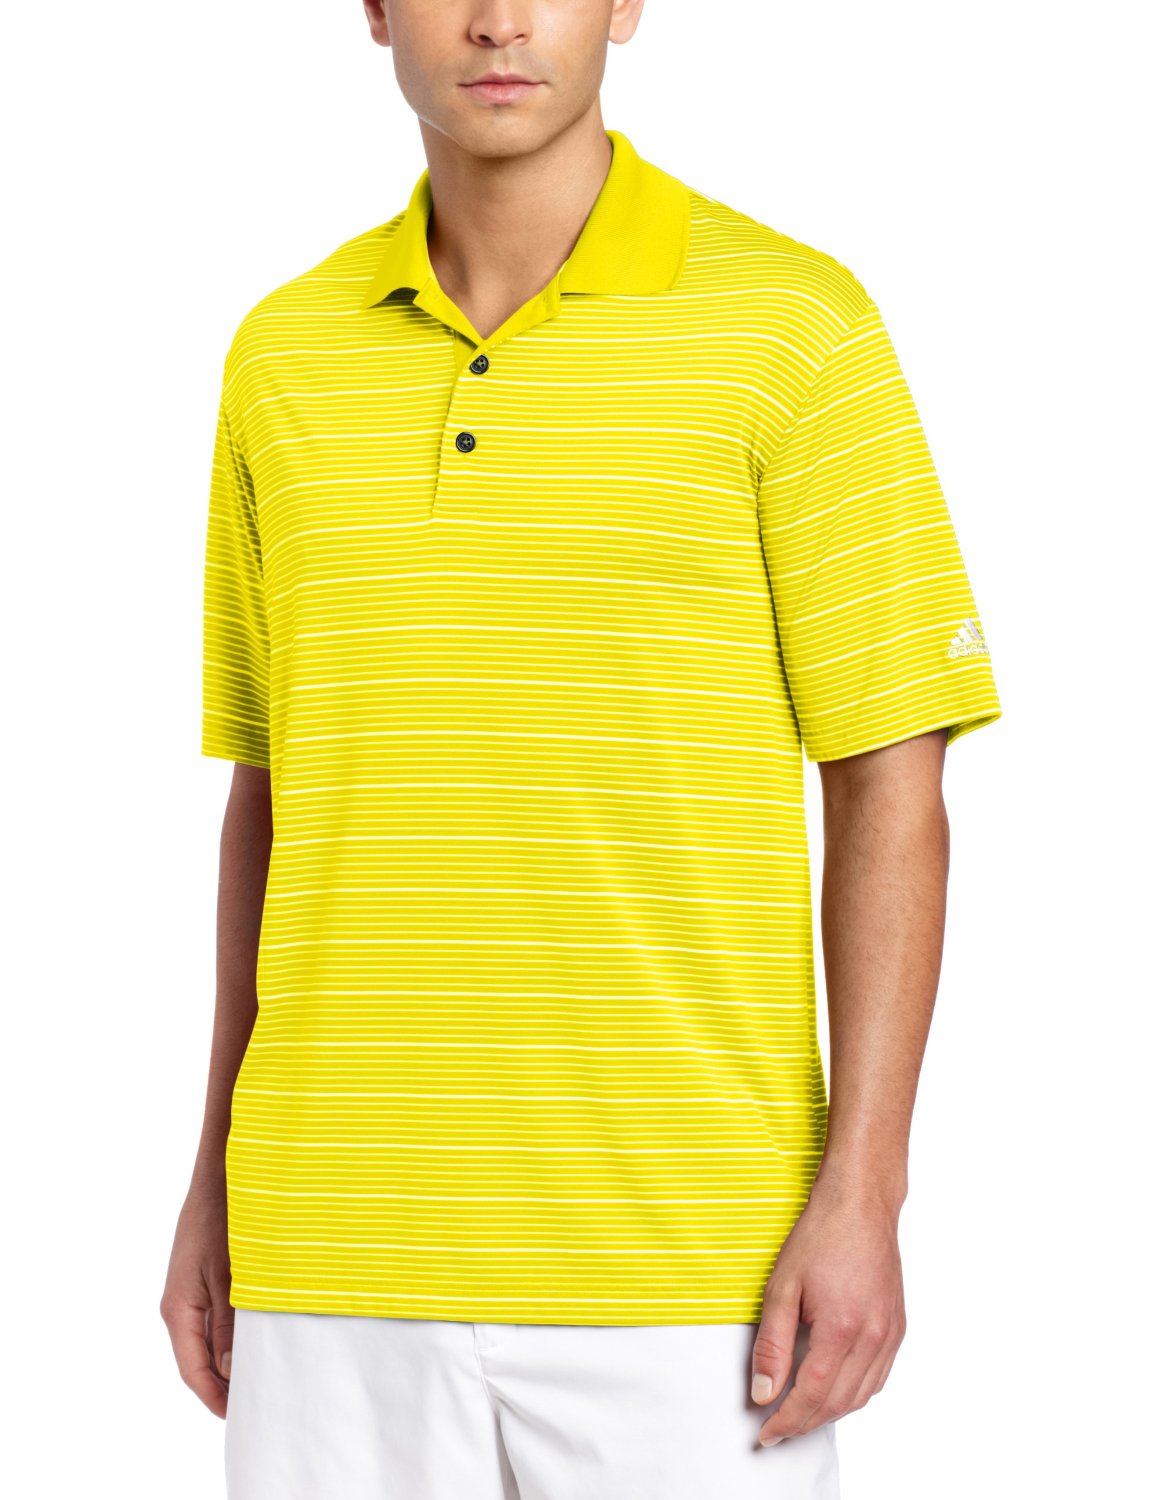 Mens Adidas Climalite Two Color Stripe Golf Polo Shirts